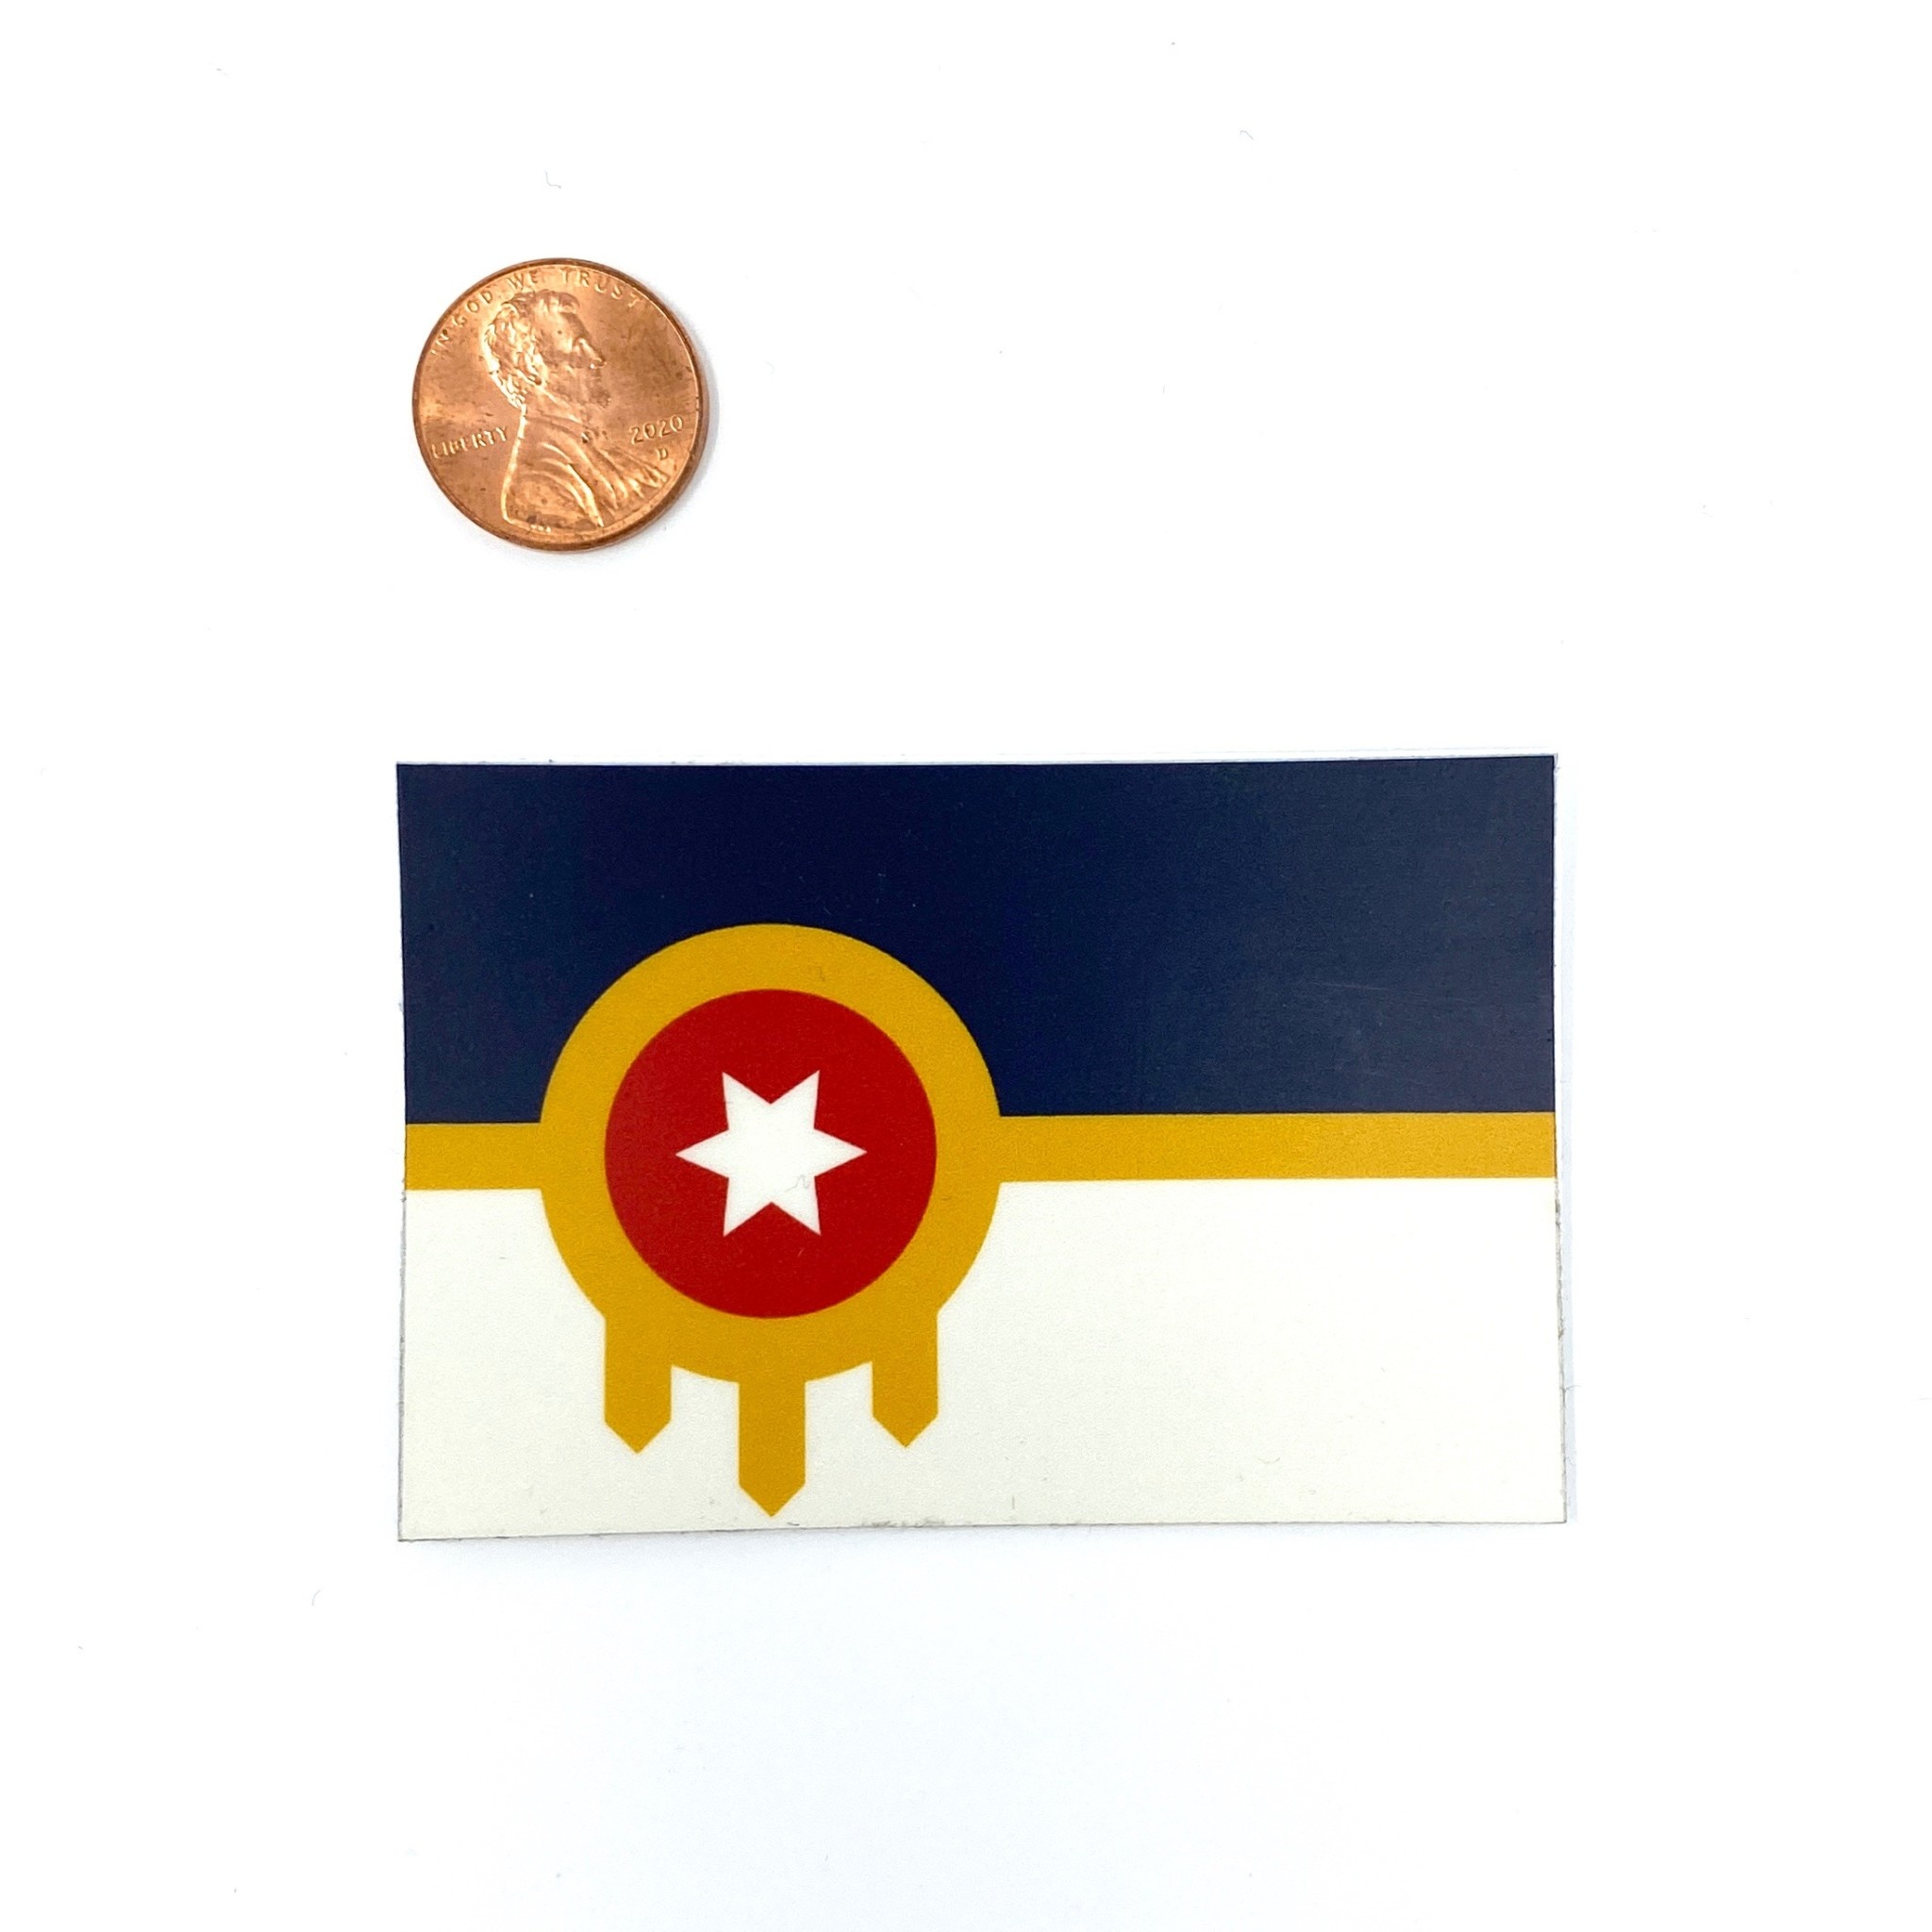 7 Stickers Free Shipping Waterproof Tulsa Oklahoma Flag Sticker Decal Mega Deal 